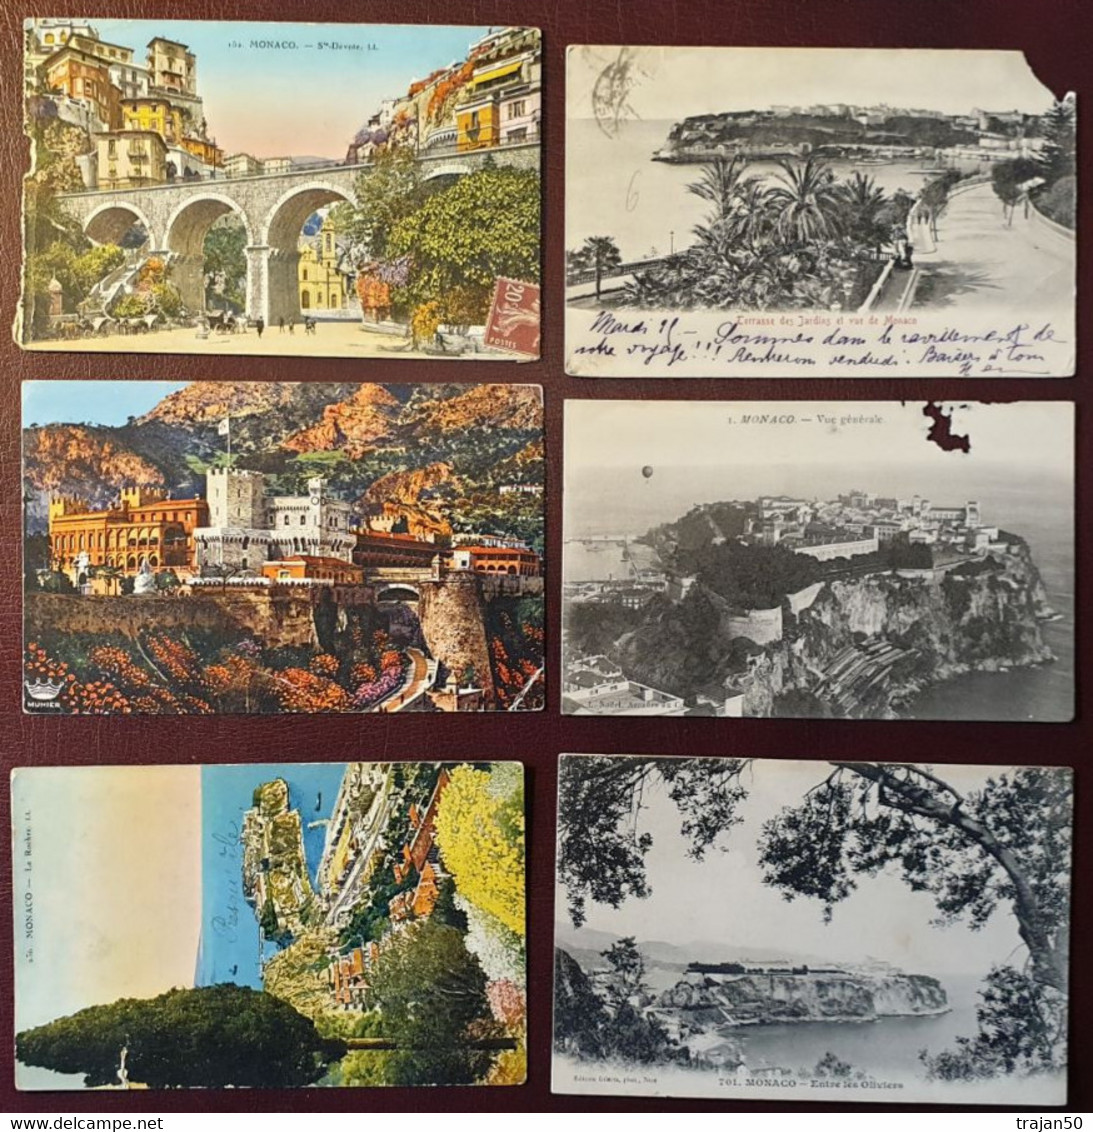 26 cartes postales de la principauté de Monaco dont 2 cartes publicitaires (chocolat Meunier, zomothérapie).